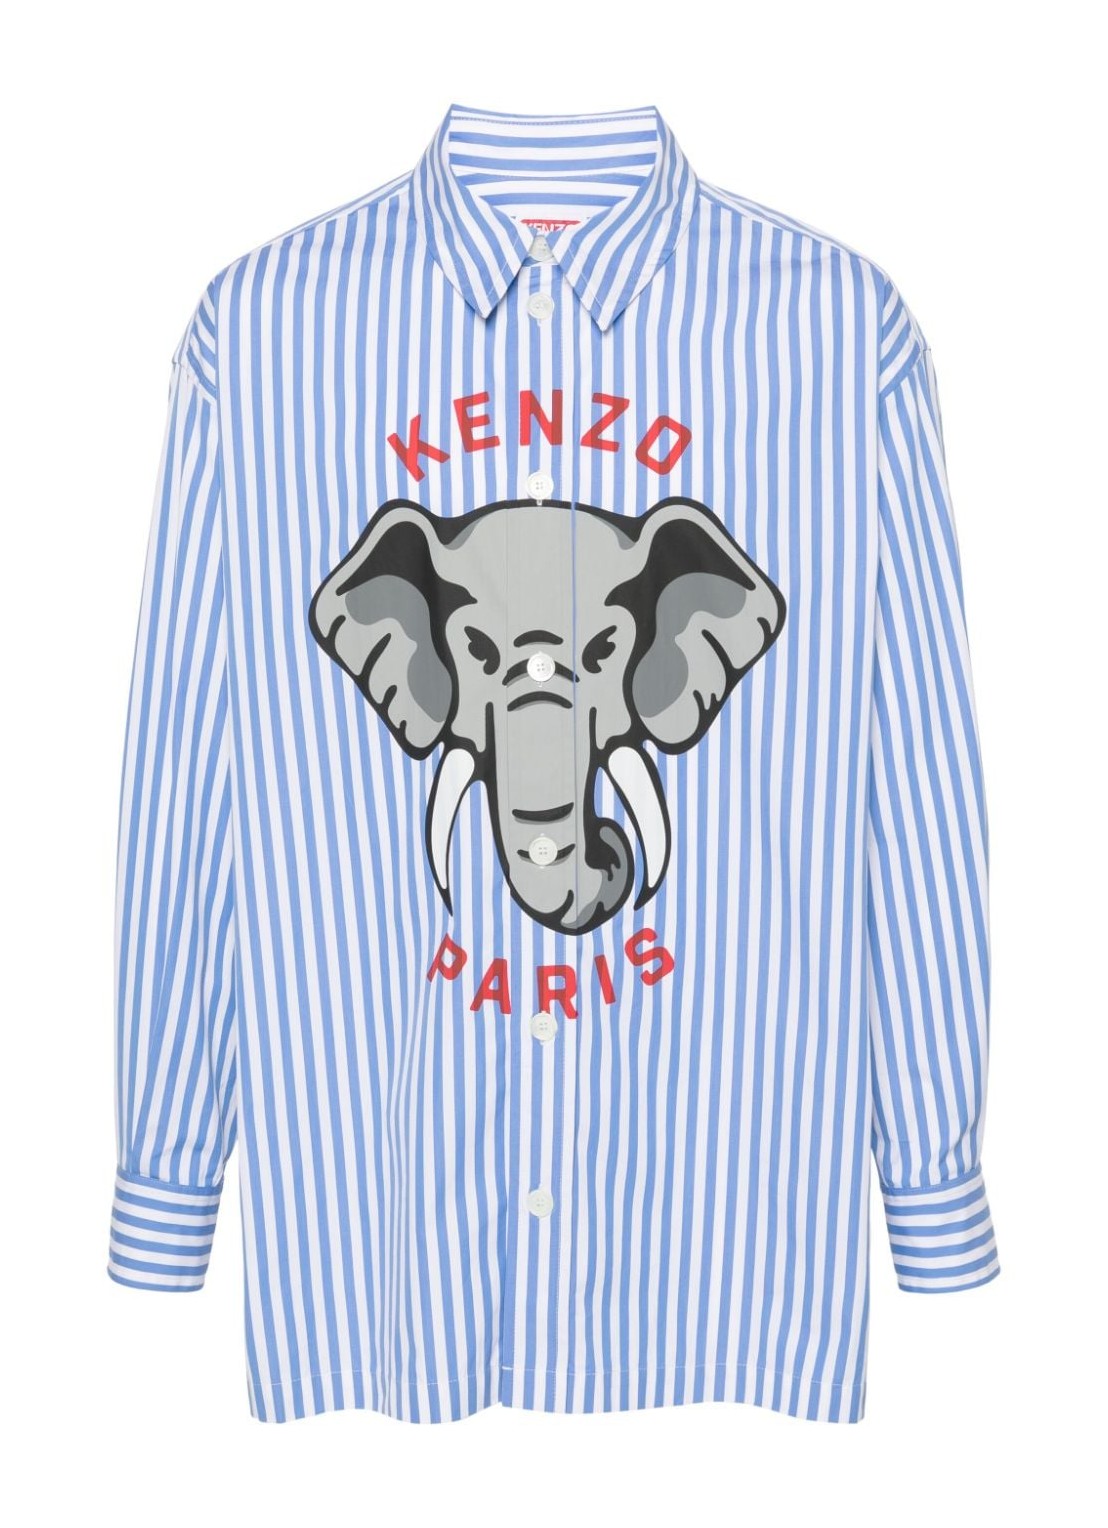 Camiseria kenzo shirt man kenzo elephant oversized shirt fe55ch5109lm 71 talla Azul
 